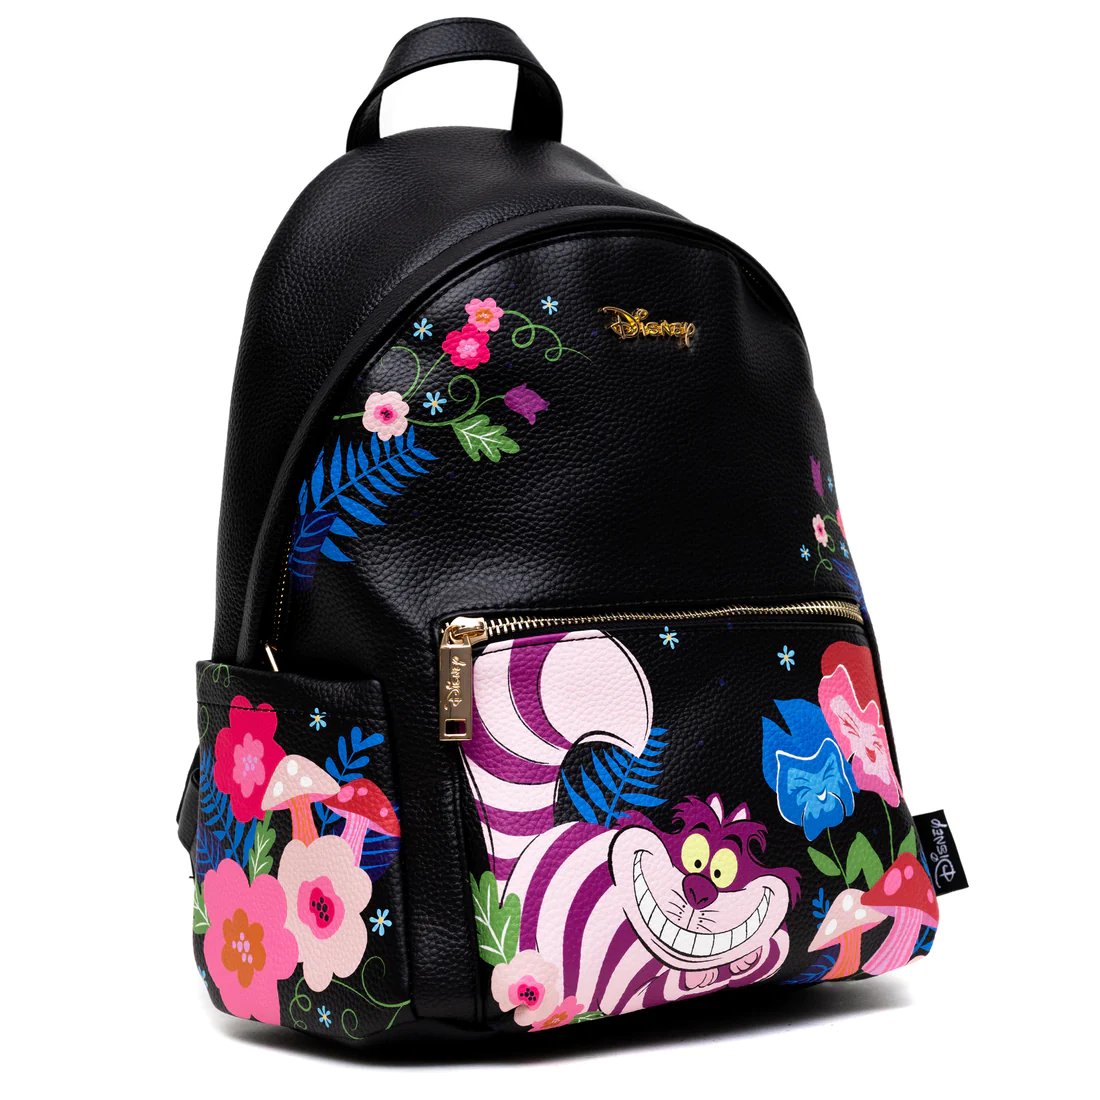  Loungefly X Disney Alice in Wonderland Cheshire Cat Mini  Backpack